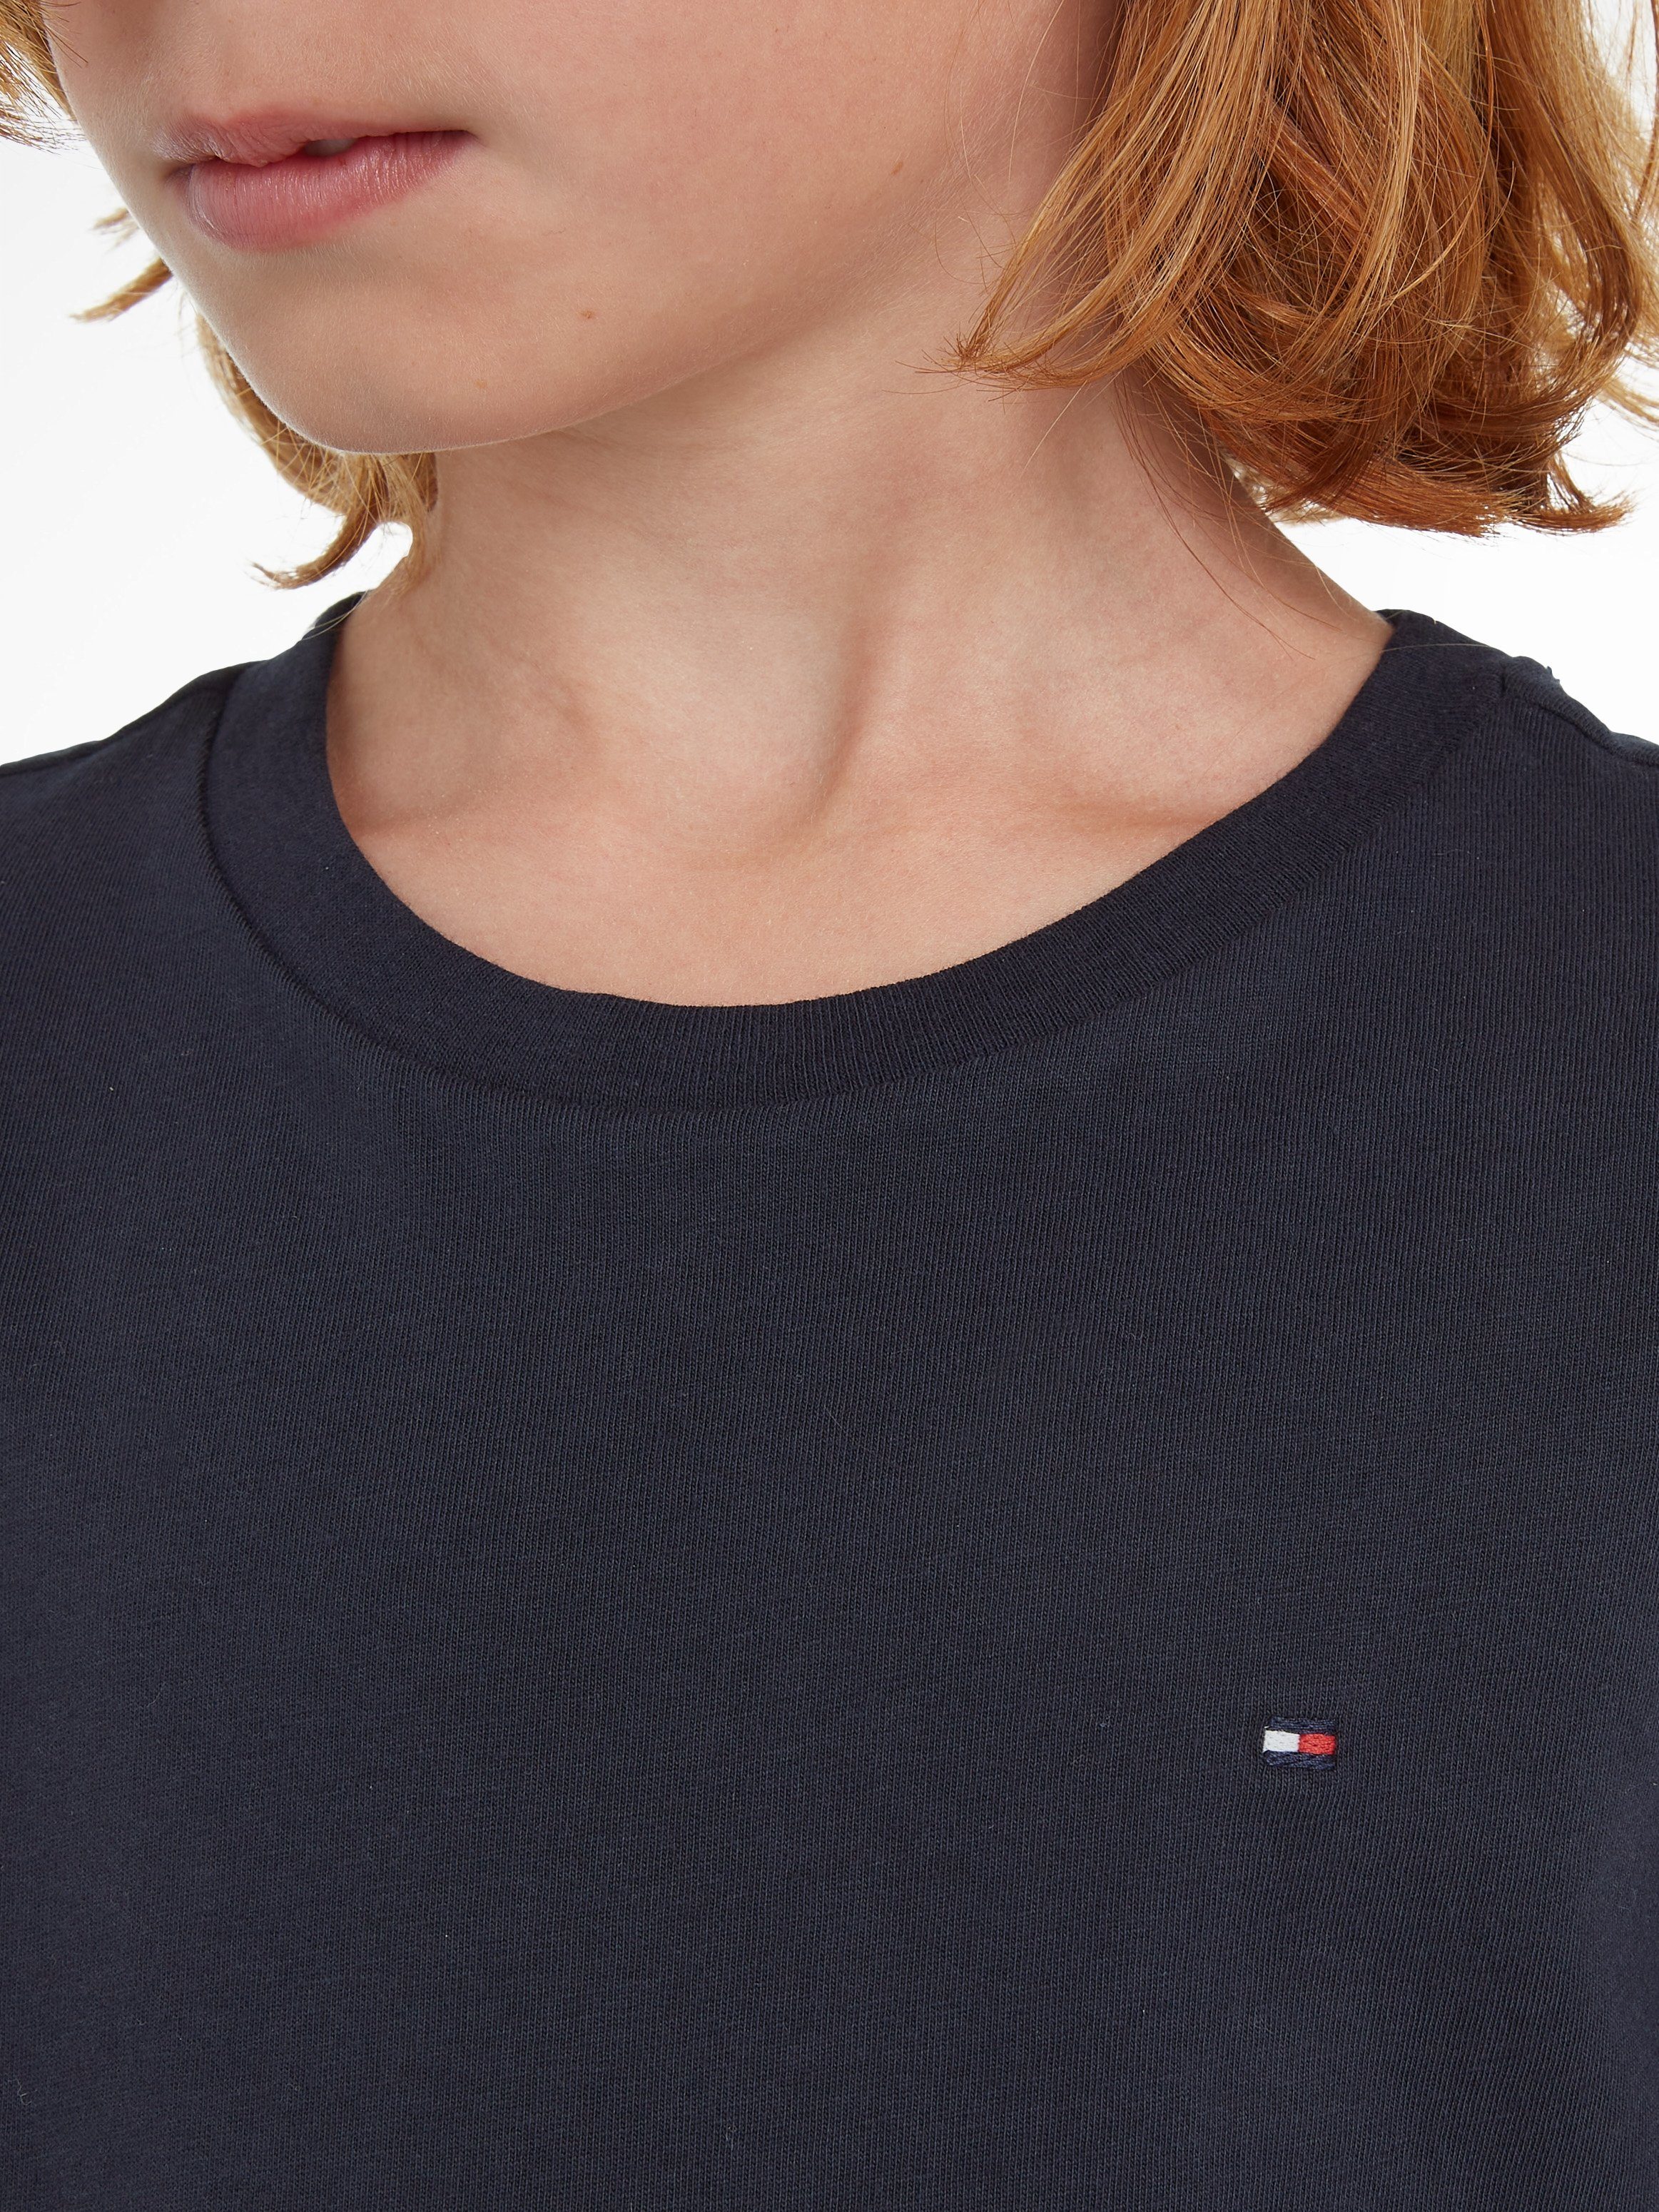 Tommy Hilfiger T-Shirt BOYS BASIC Kids KNIT CN MiniMe,für Junior Jungen Kinder